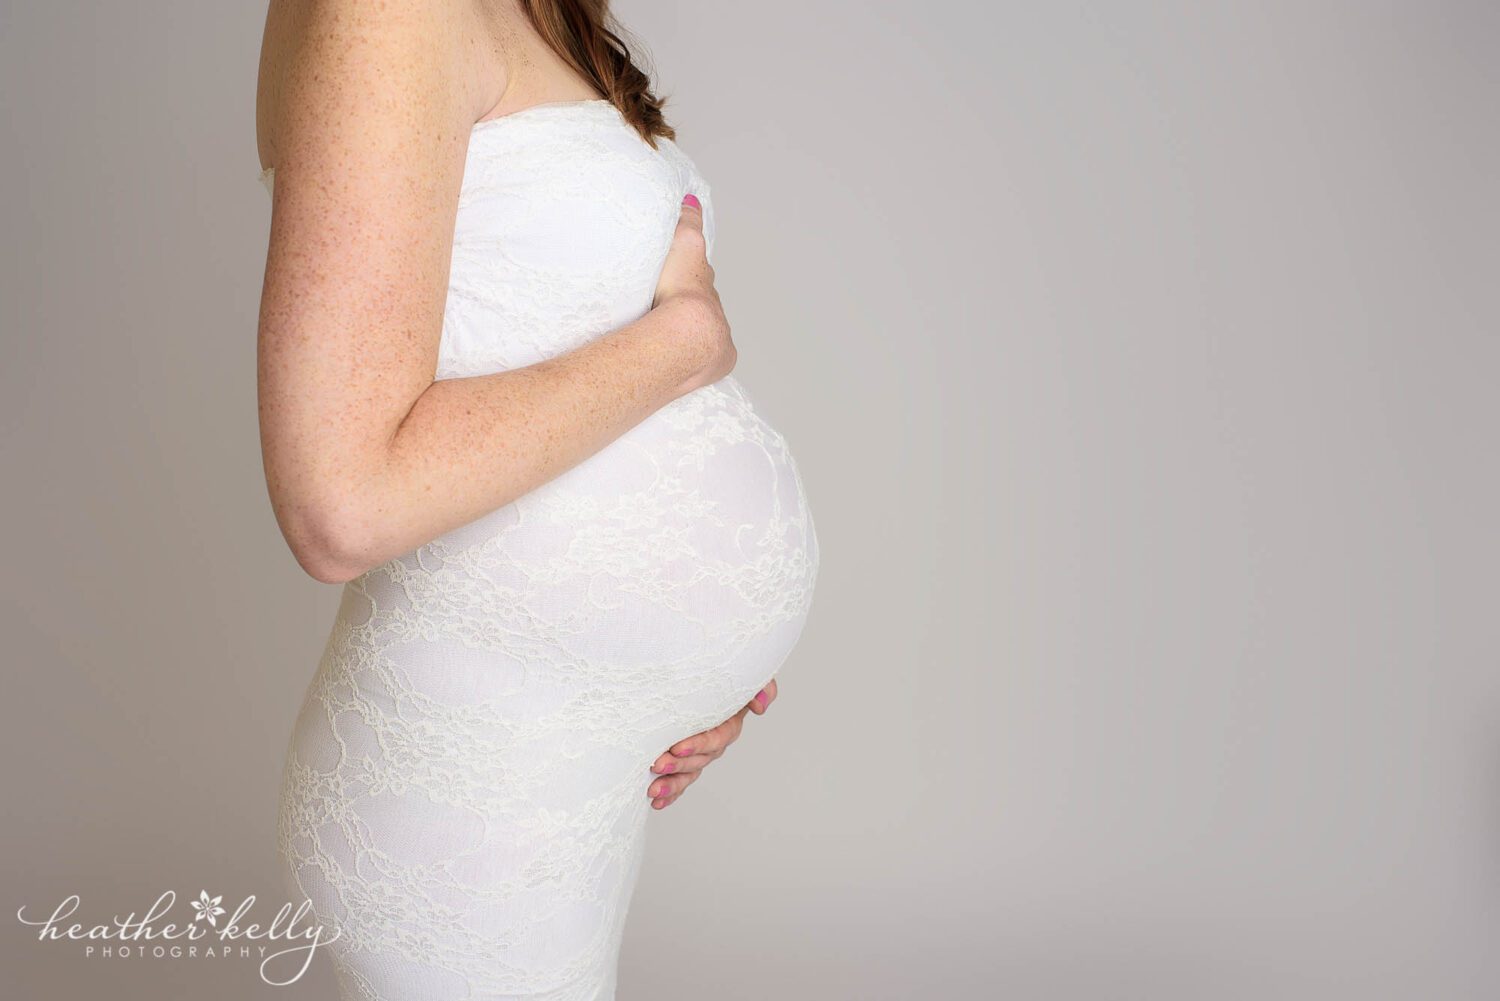 Southbury CT Maternity Photography